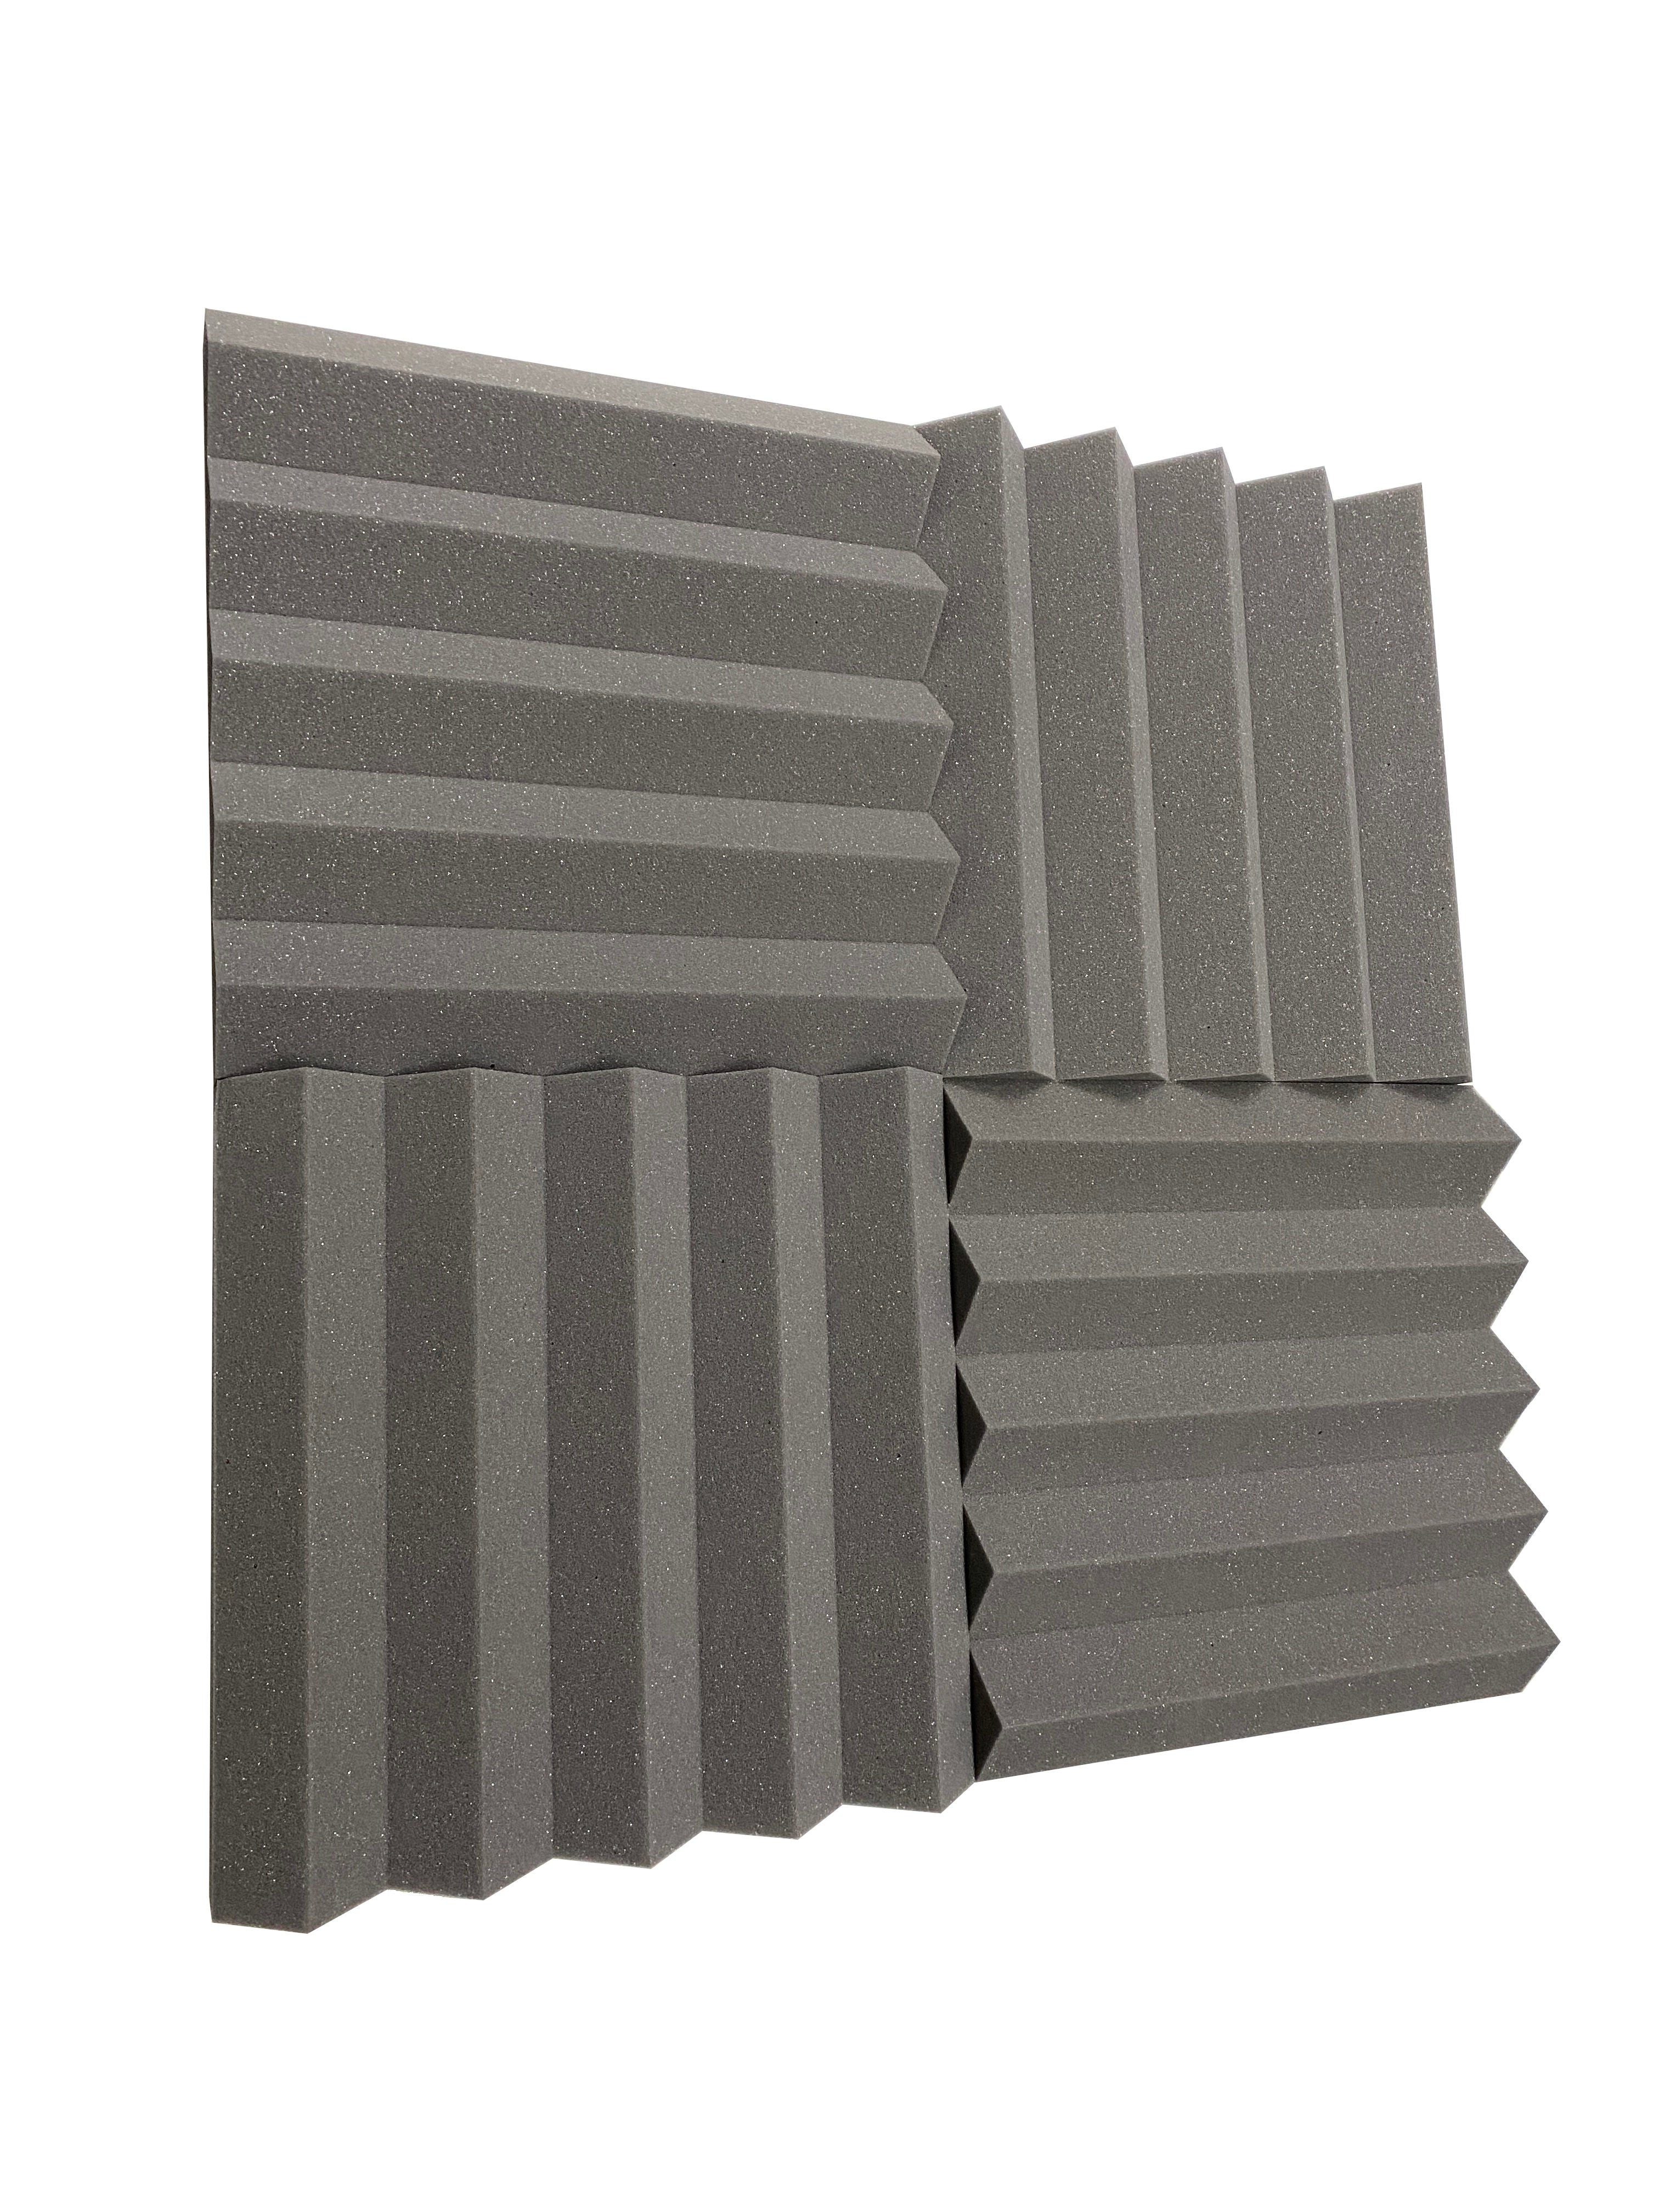 Wedge PRO Combo Acoustic Studio Foam Tile Kit – 42 Fliesen, 13,92 m² Abdeckung